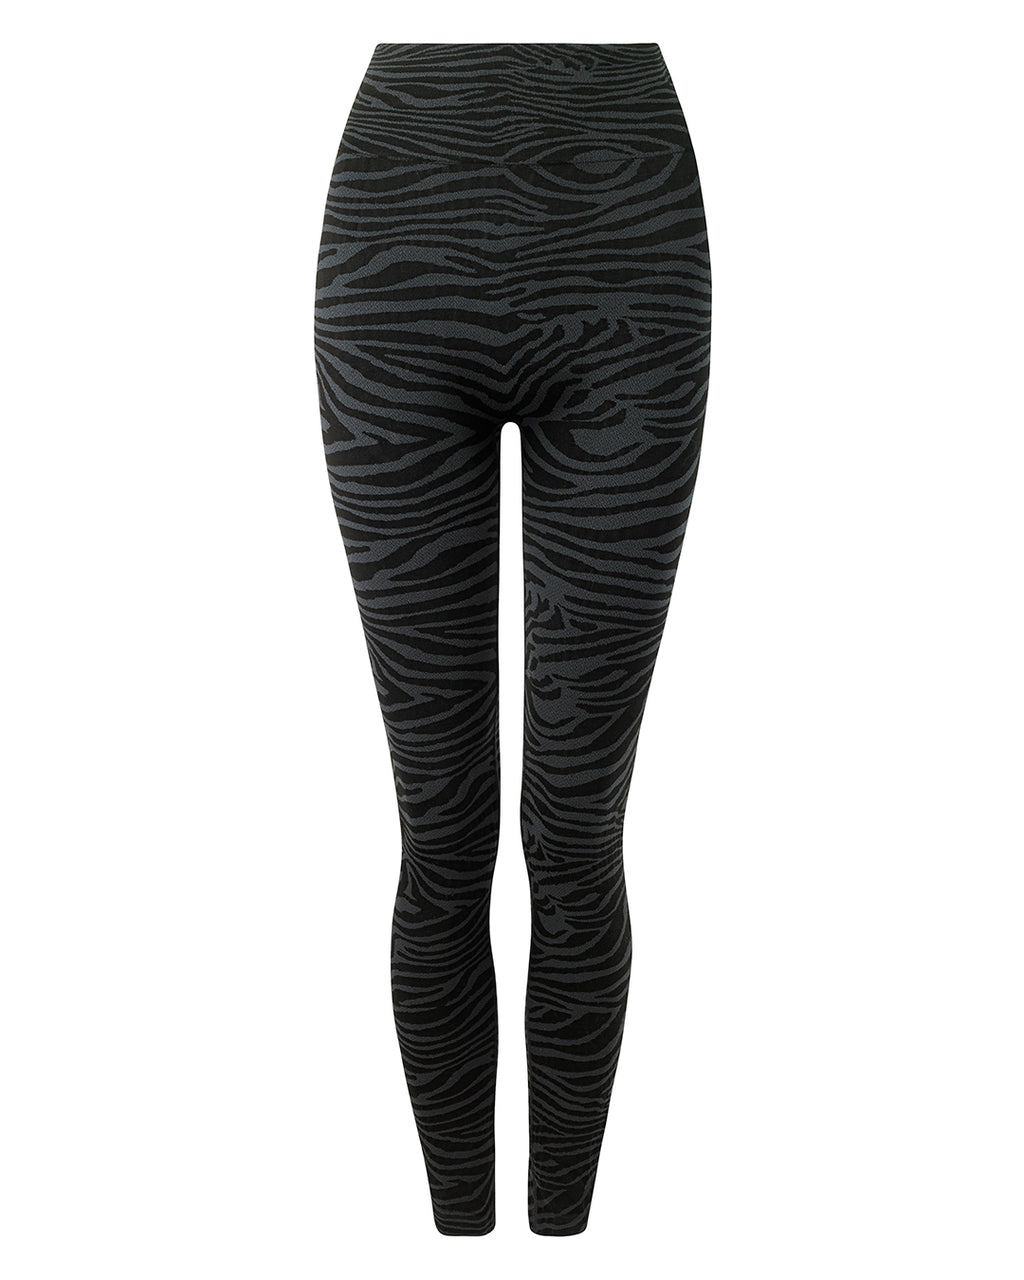 Womens Plus Size Zebra Print Stretchy Labies Viscose Jersey Leggings